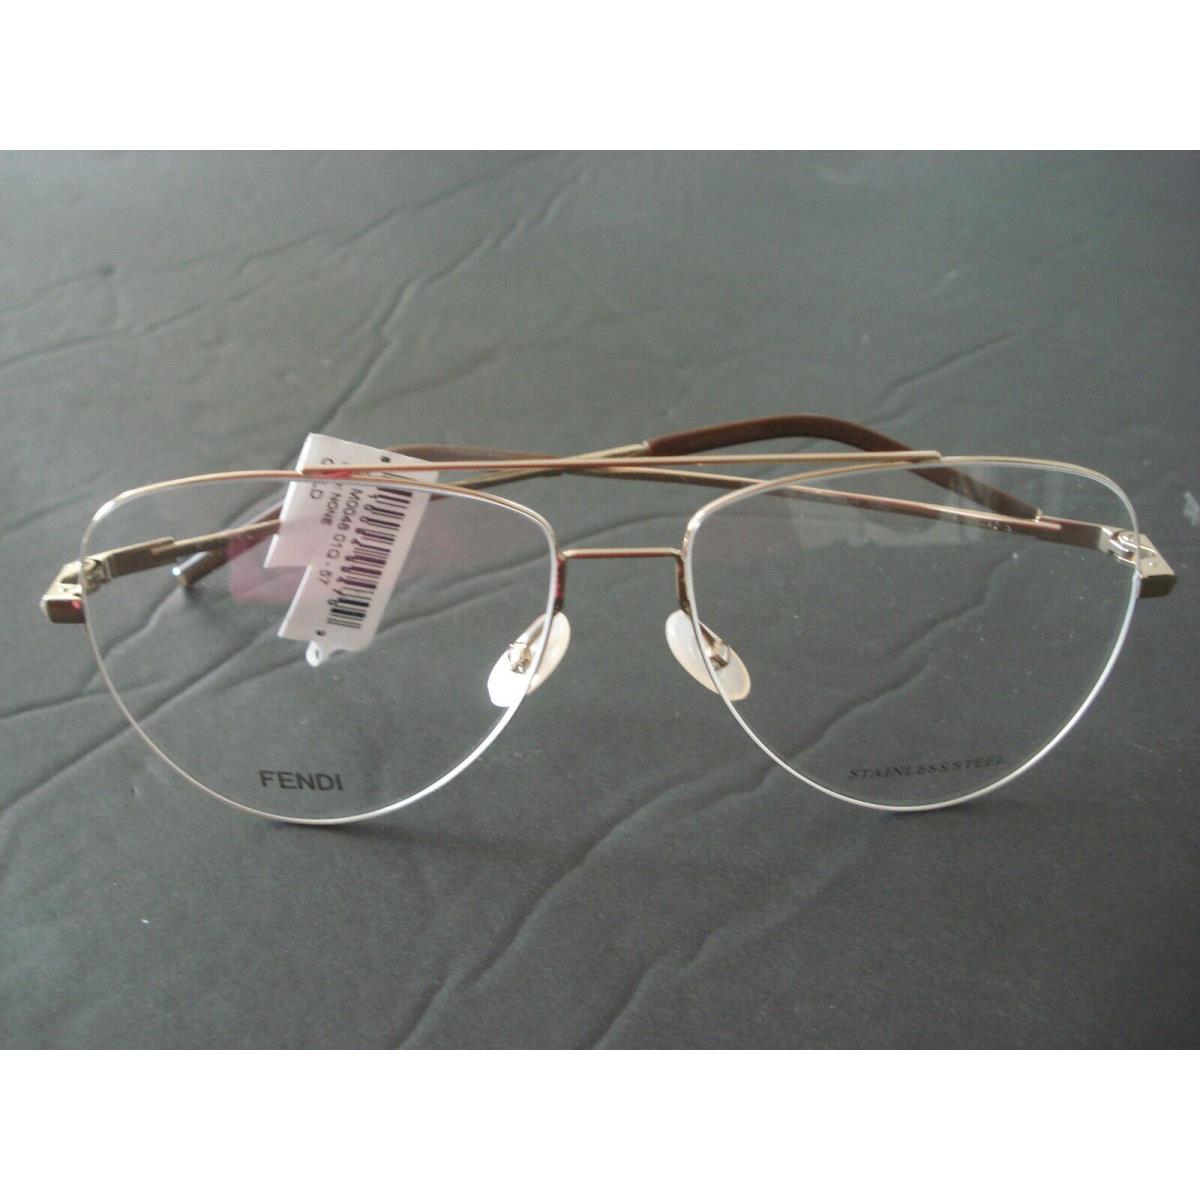 Fendi eyeglasses  - Brown and gold Frame 2